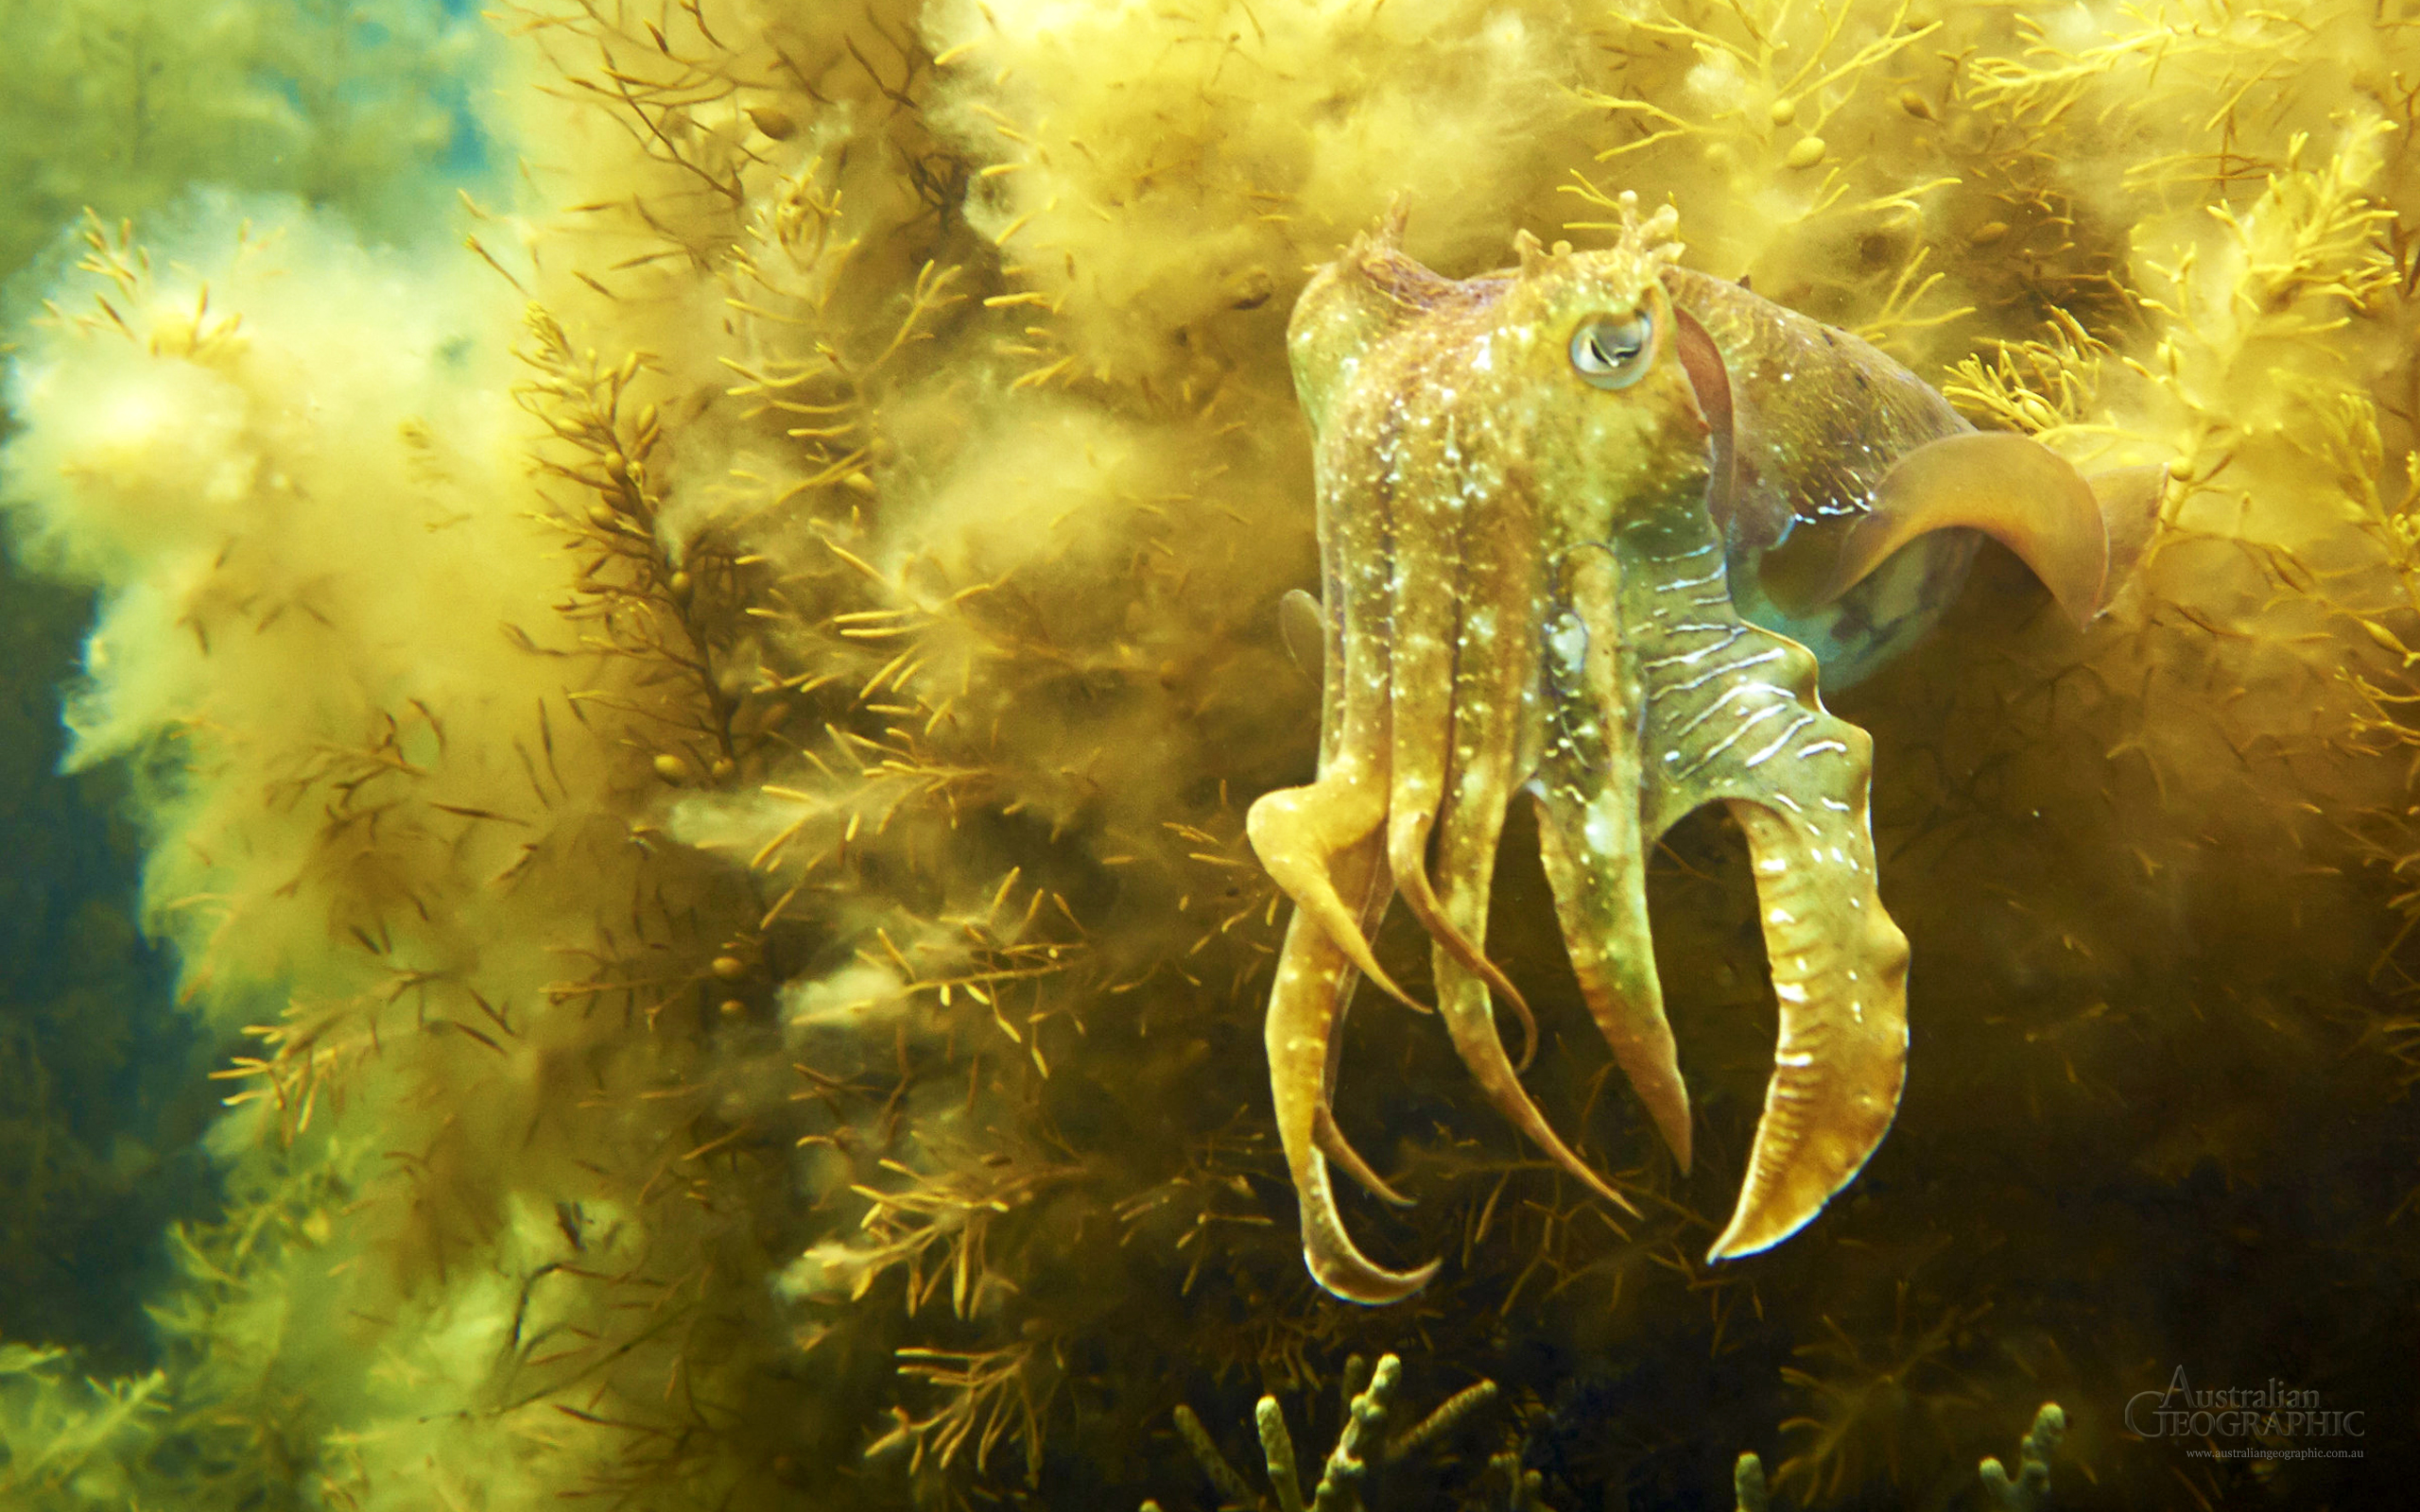 Cuttlefish Wallpaper Australian Geographic